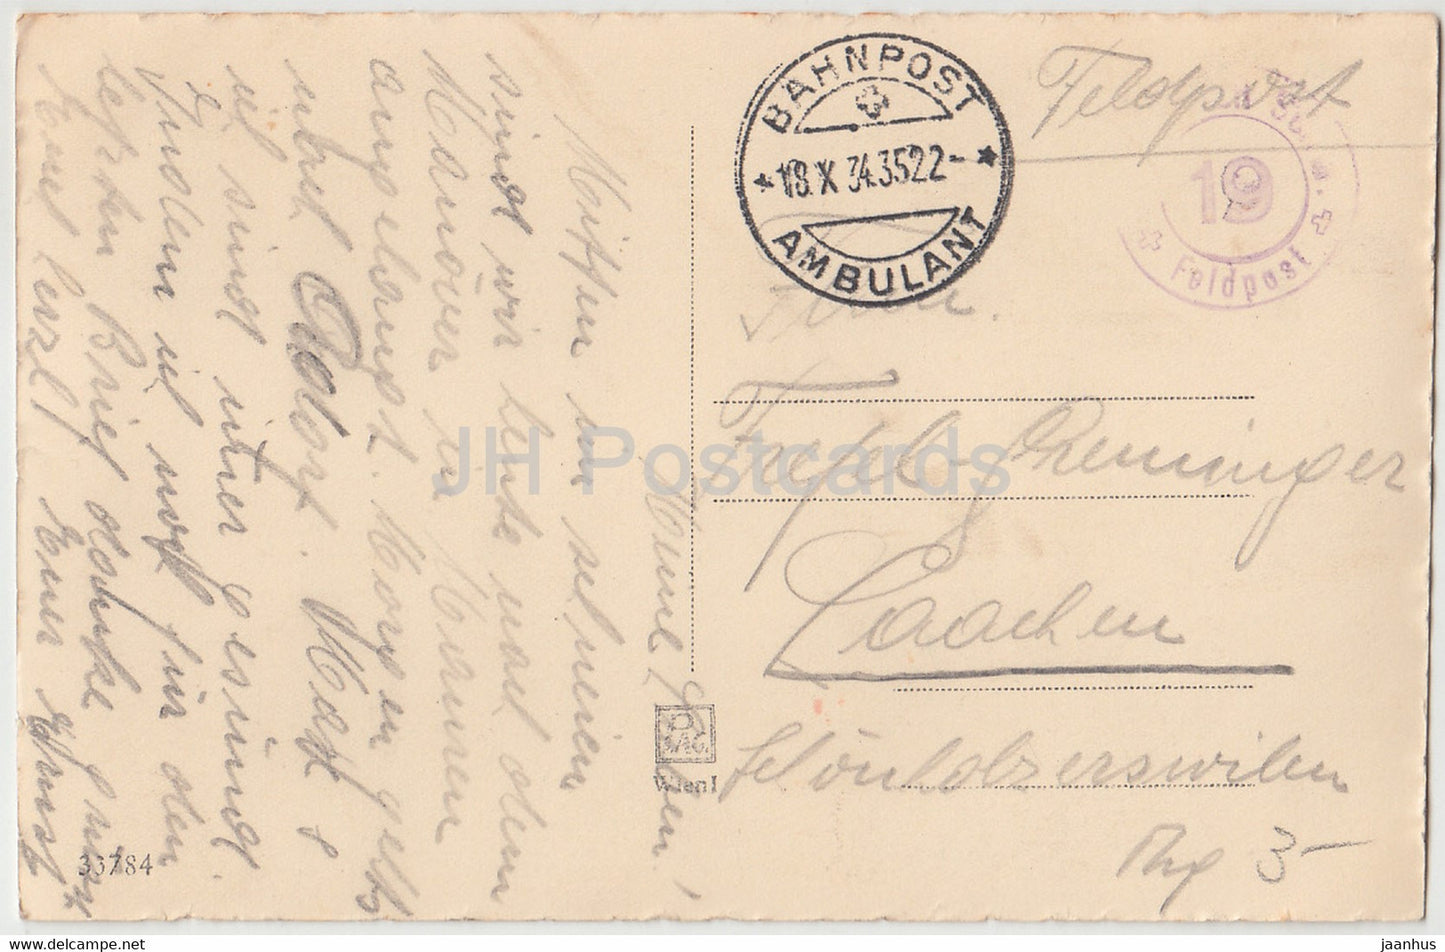 Scheidende Sonne - Feldpost - Bahnpost Ambulant - 33784 - old postcard - 1934 - Austria - used